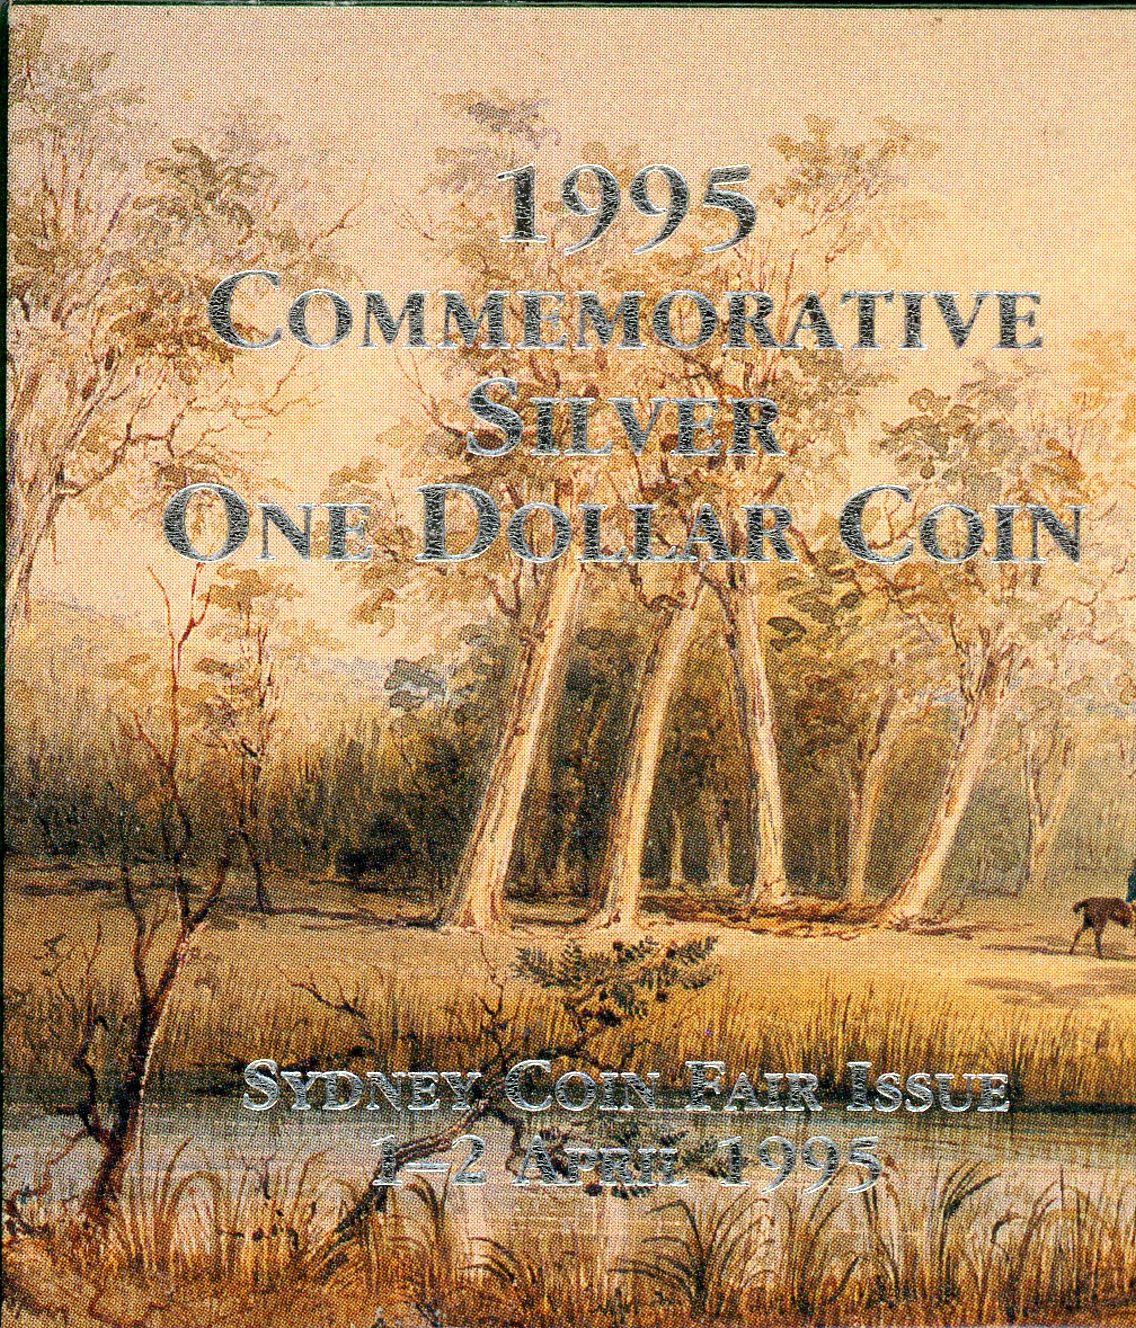 Thumbnail for 1995 Commemorative Silver Waltzing Matilda $1 Coin - Sydney Coin Fair 1-2 April 1995